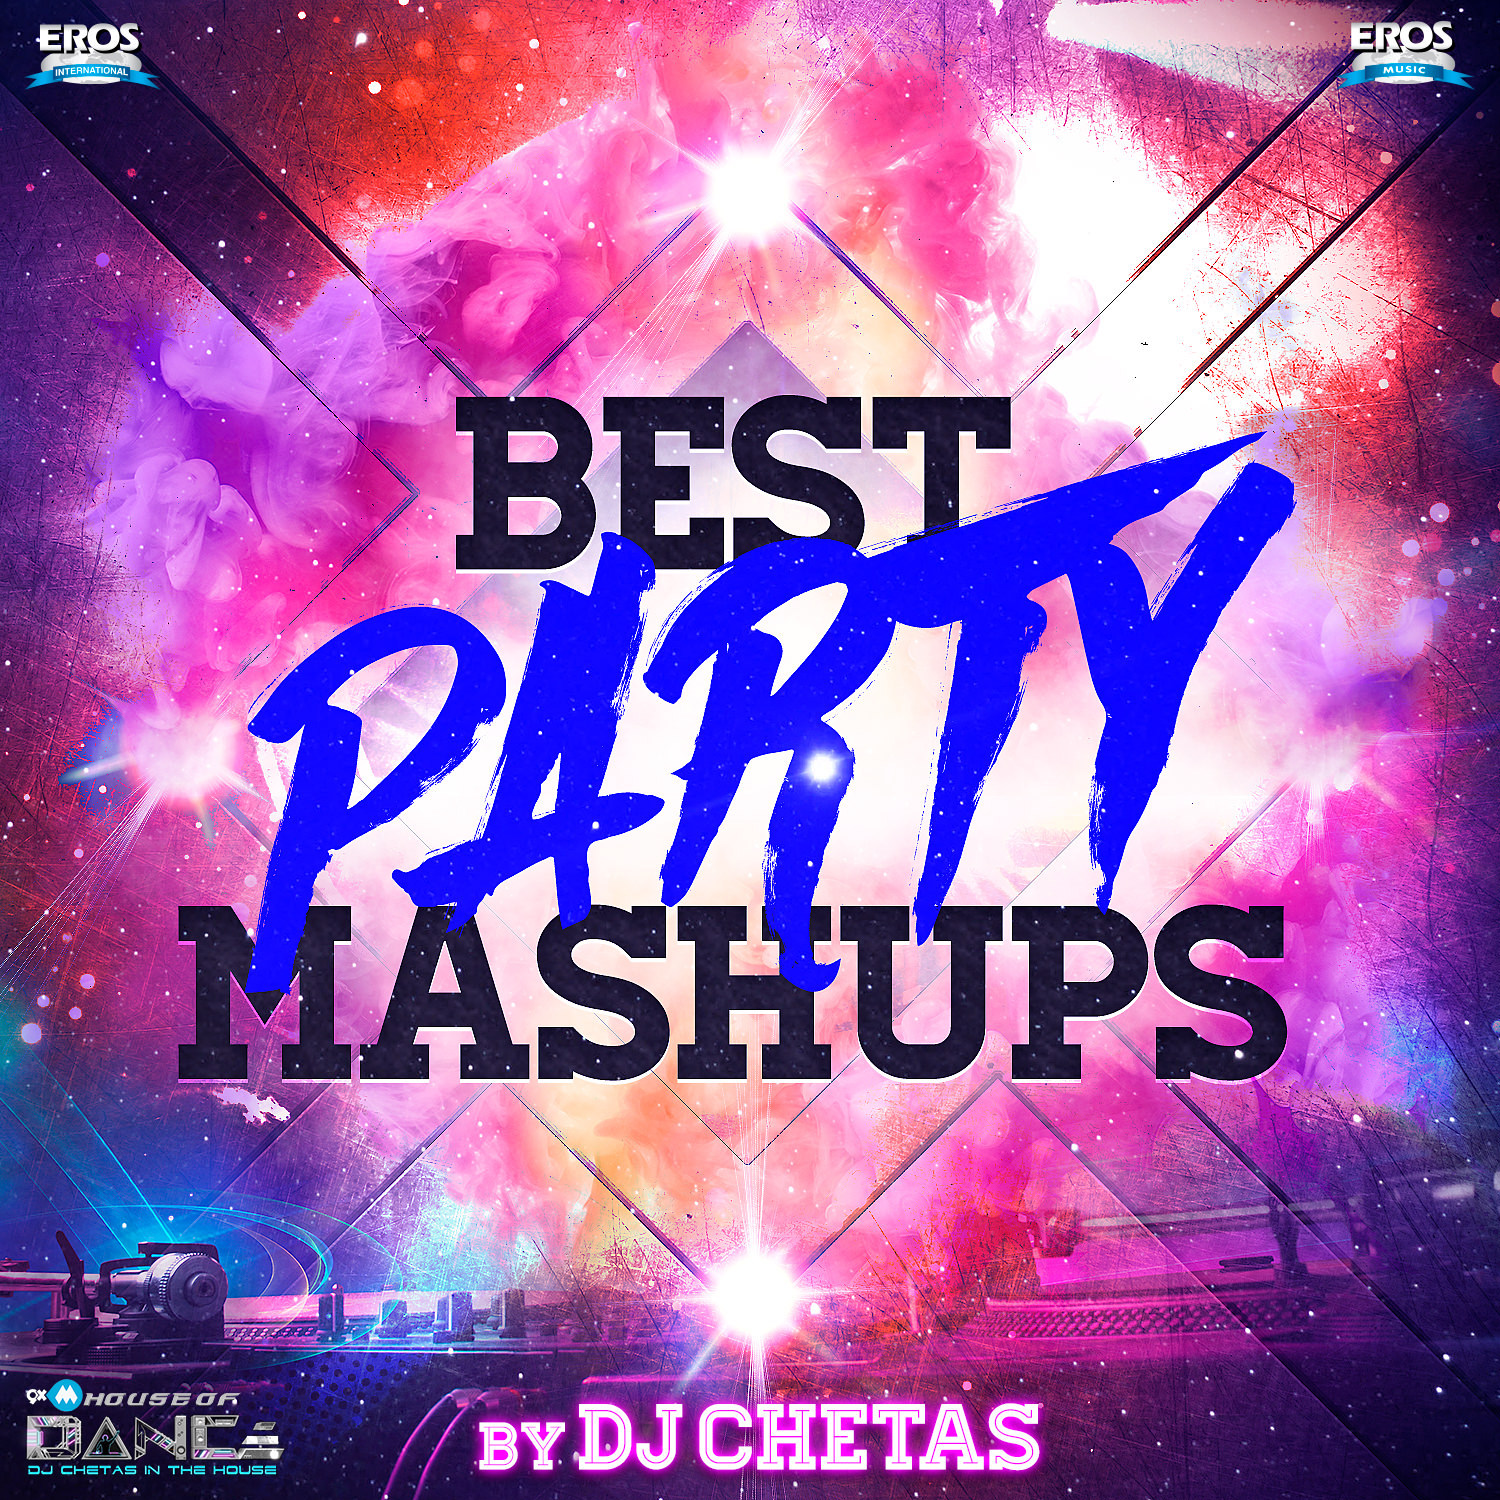 Lets Dance Bollywood Mashup by DJ Chetas